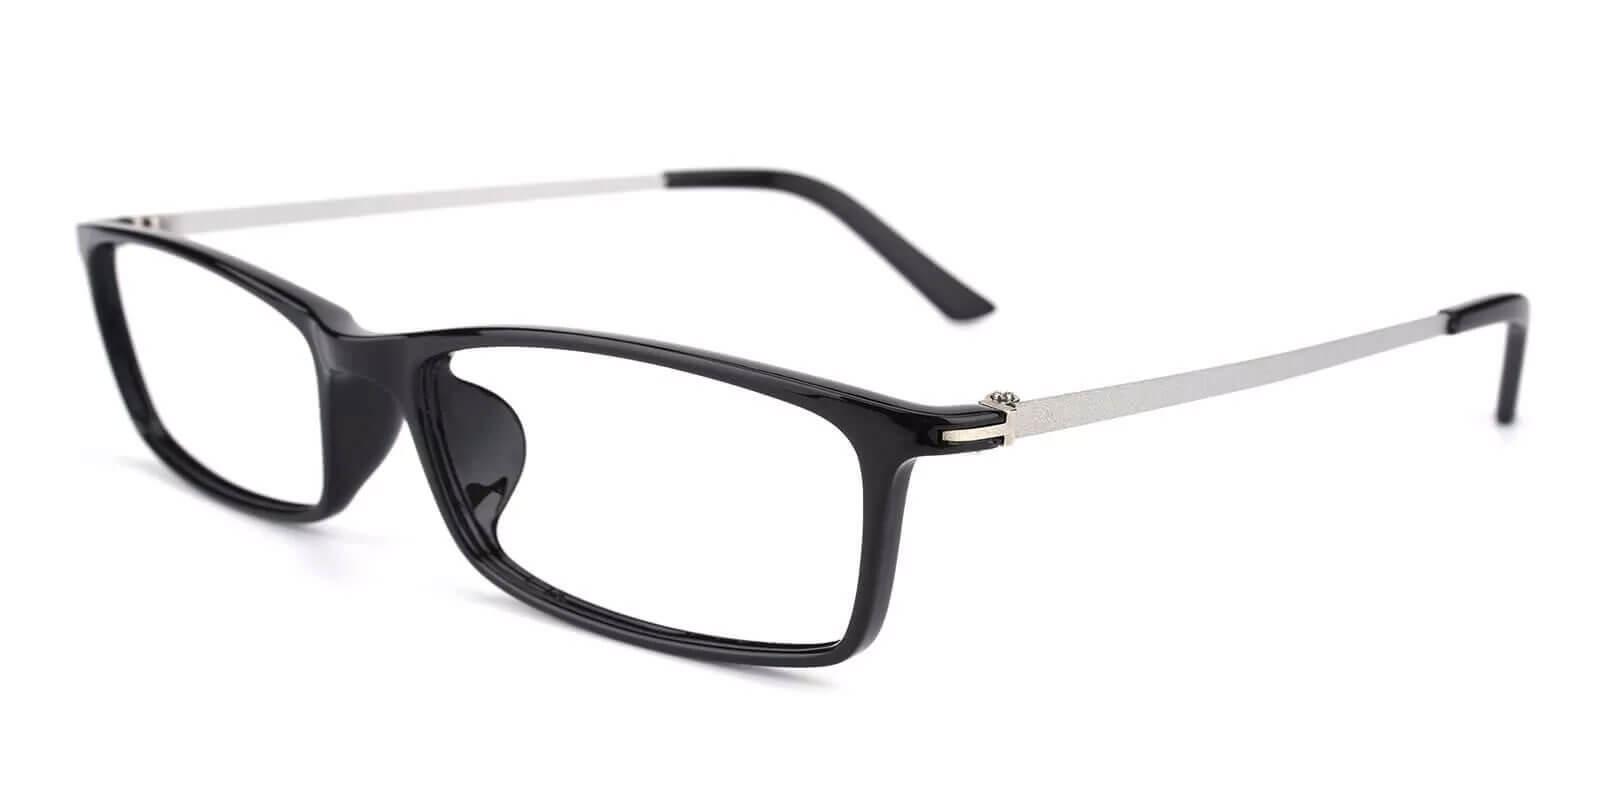 Quapaw Black TR Eyeglasses , Lightweight , UniversalBridgeFit Frames from ABBE Glasses